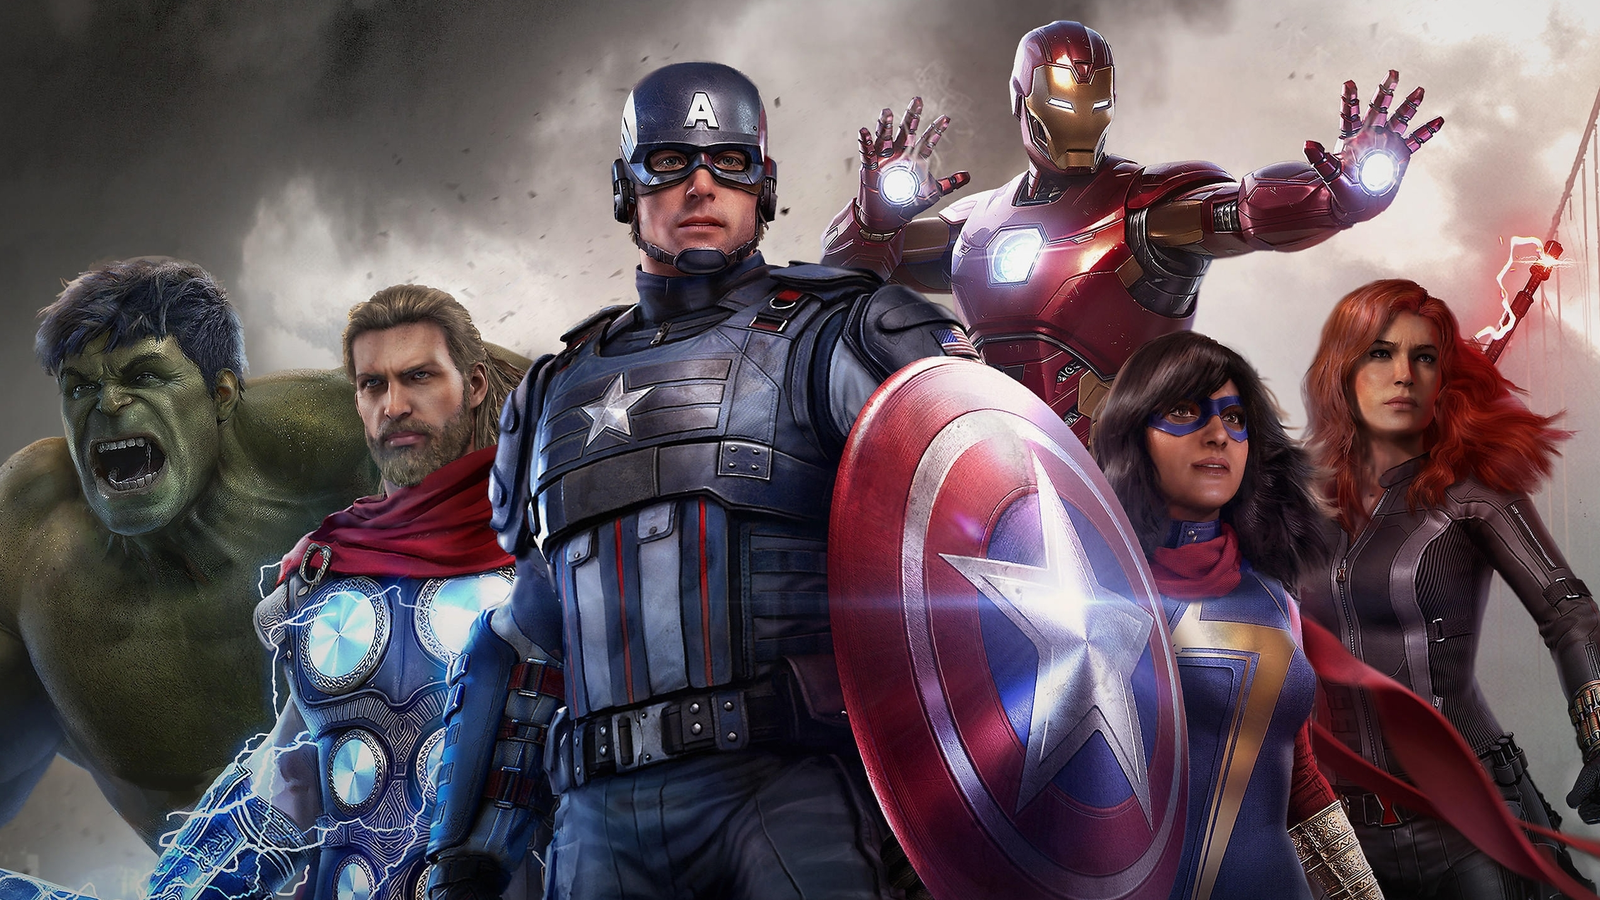 Marvel's Avengers - NEW MCU Thor Ragnarok Suit Gameplay 4K 60FPS